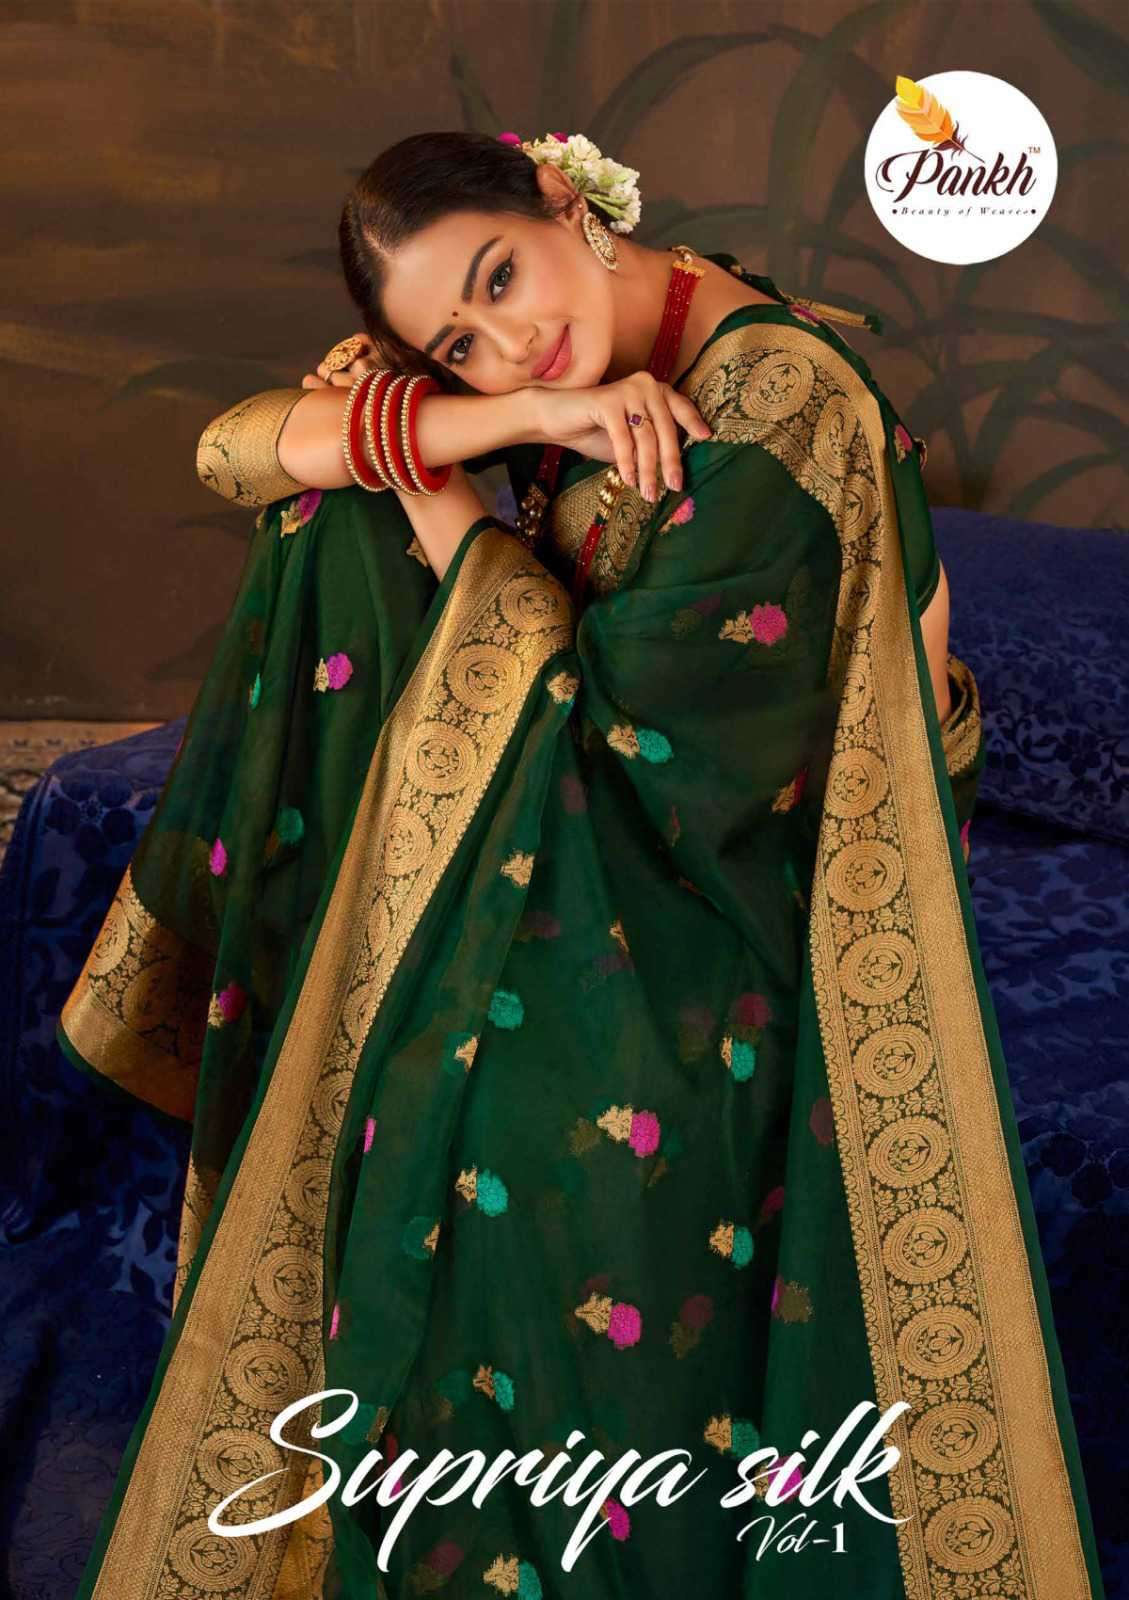 Pankh Supriya Silk Vol 1 1315 Colors Organza Festive Wear Saree Online Dealers